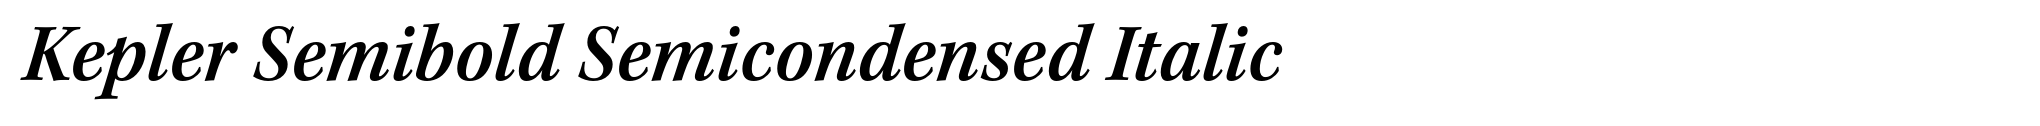 Kepler Semibold Semicondensed Italic image